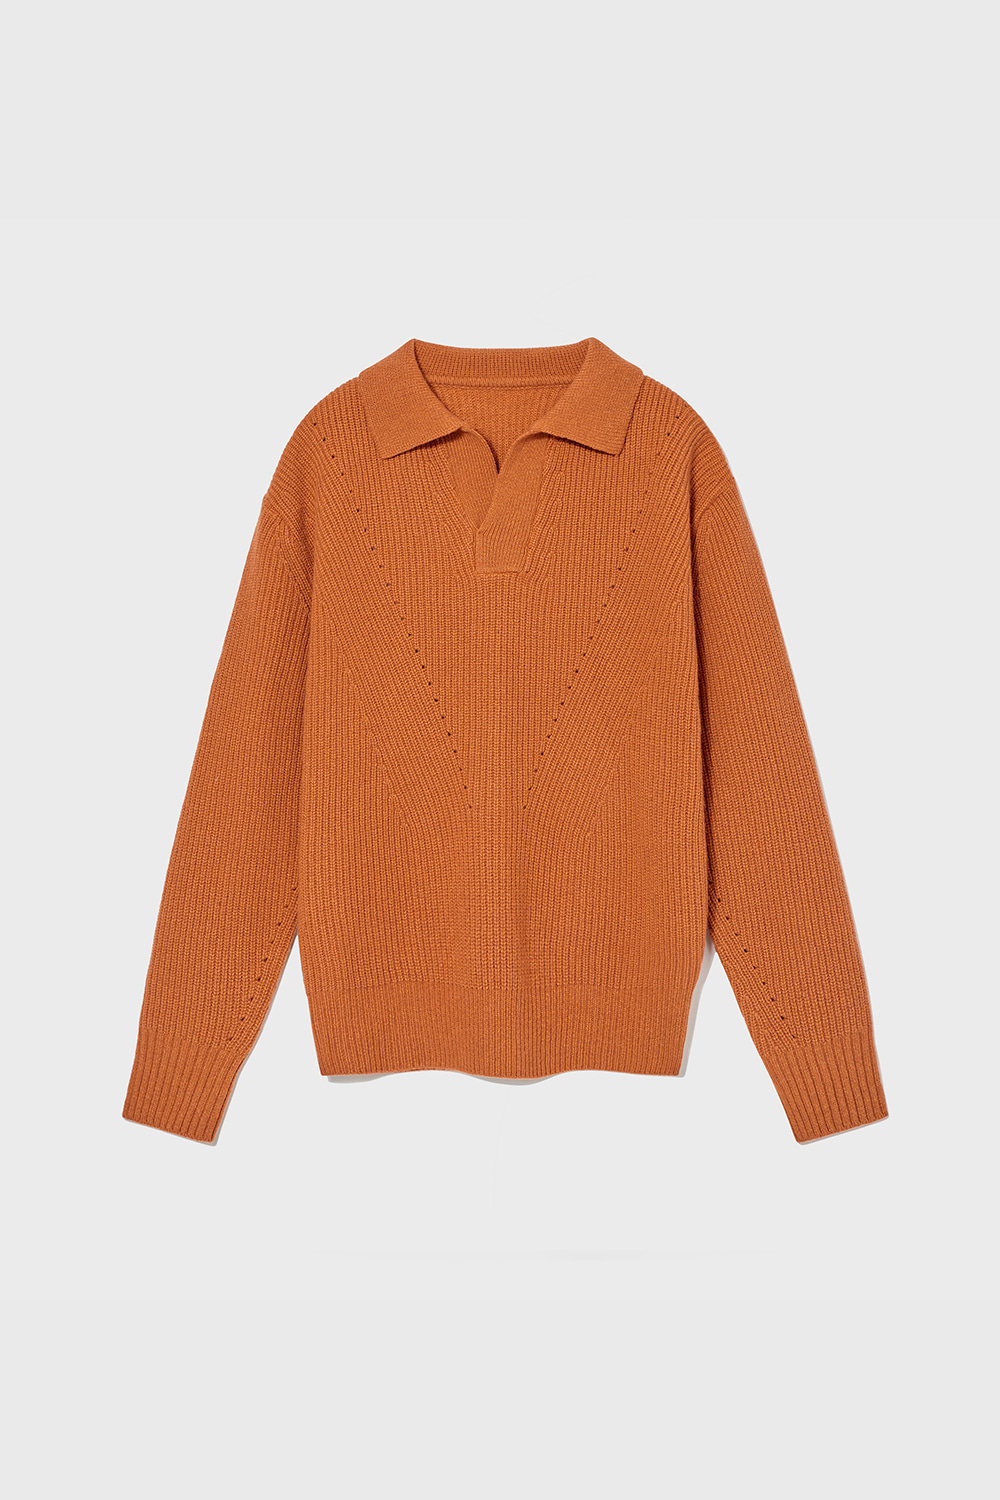 Superfine Merino Wool Punching Collar Knit (Mixed Orange)